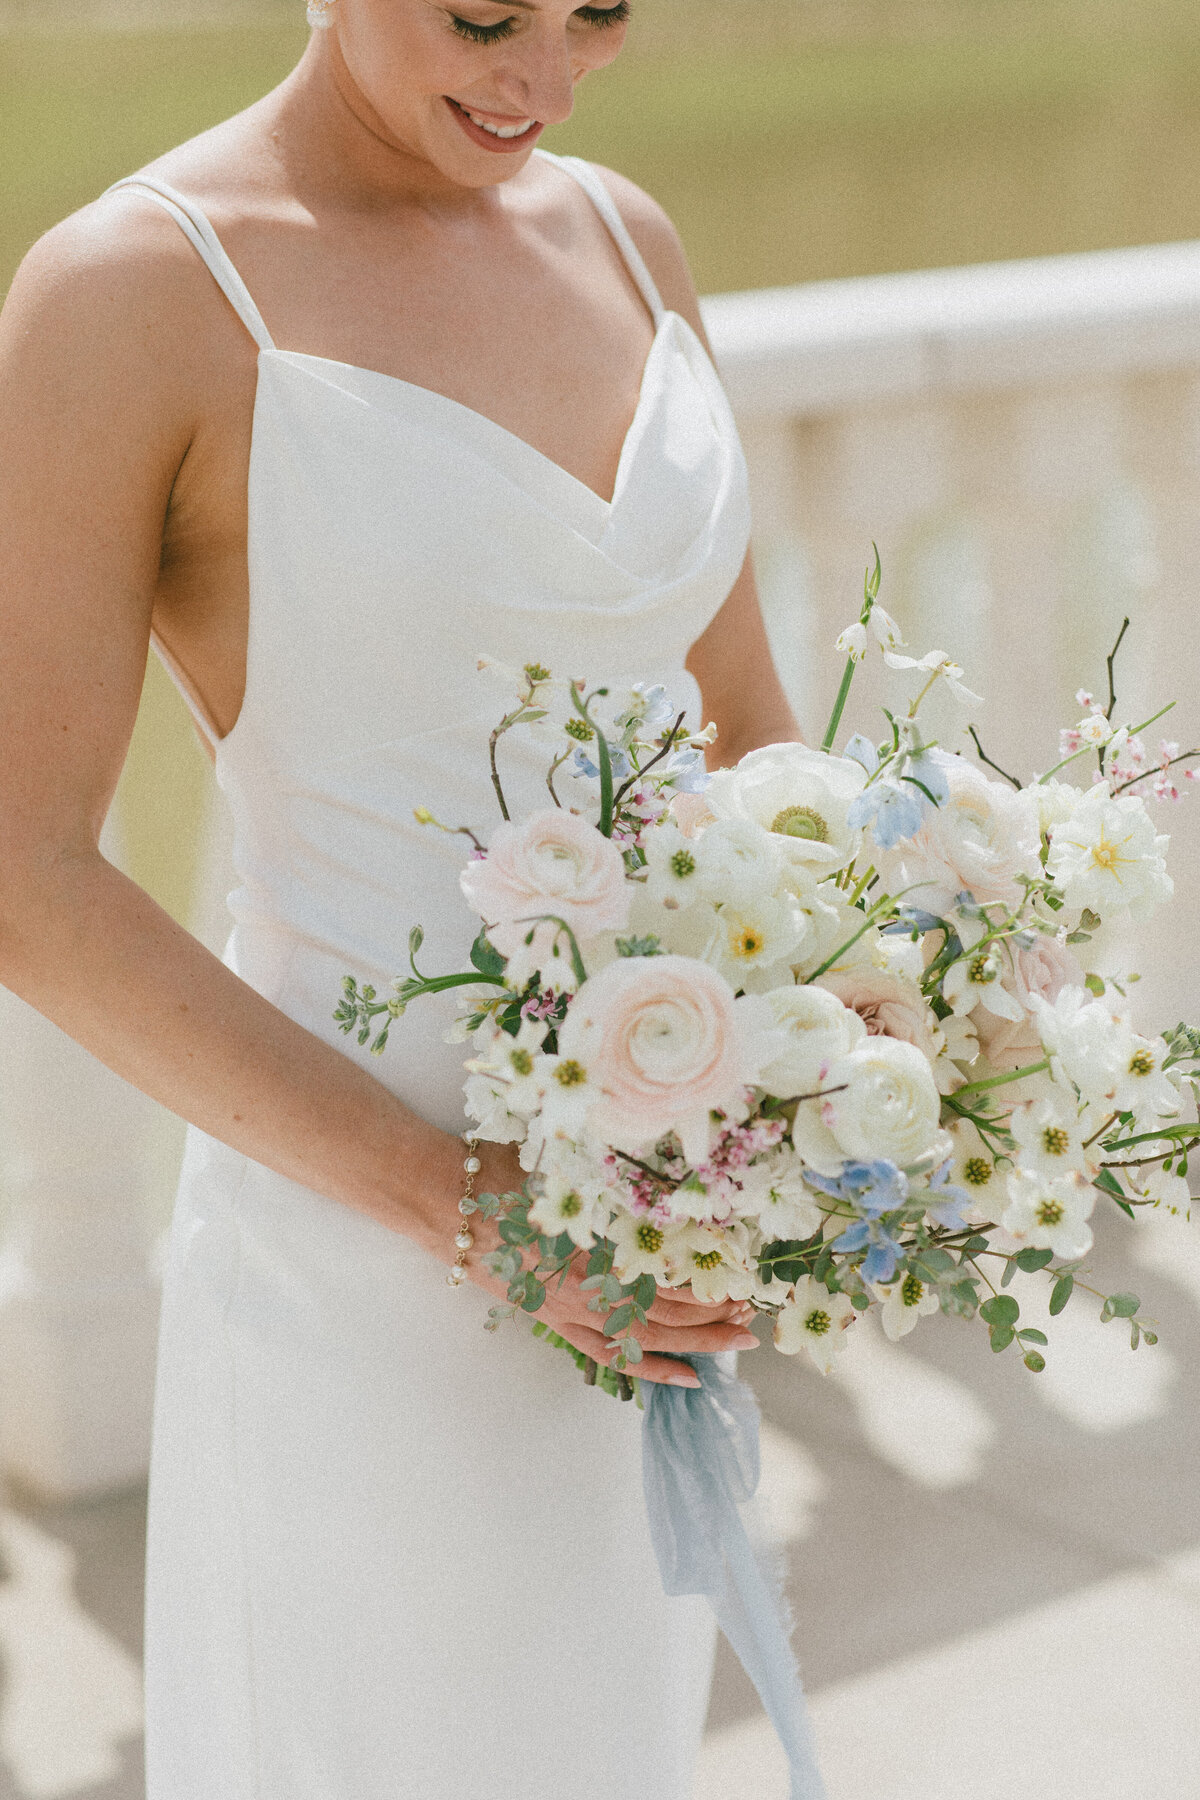 Sarah Rae Floral Designs Wedding Event Florist Flowers Kentucky Chic Whimsical Romantic Weddings3